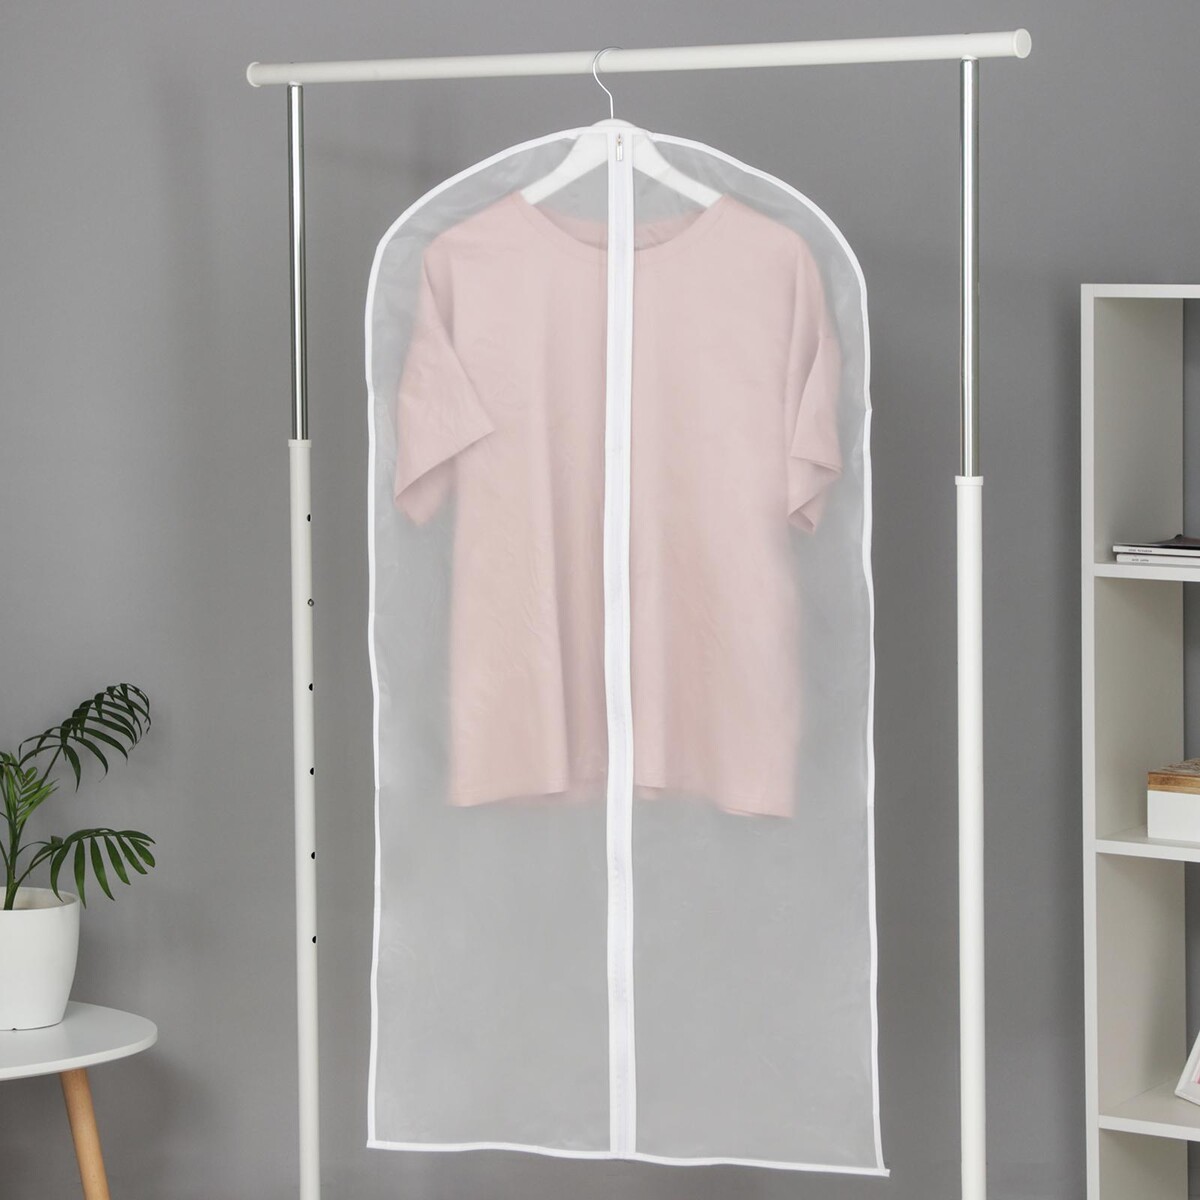 Чехол для одежды плотный доляна, 60×120 см, peva, цвет белый чехол для одежды ladо́m 60×90 см плотный peva серый